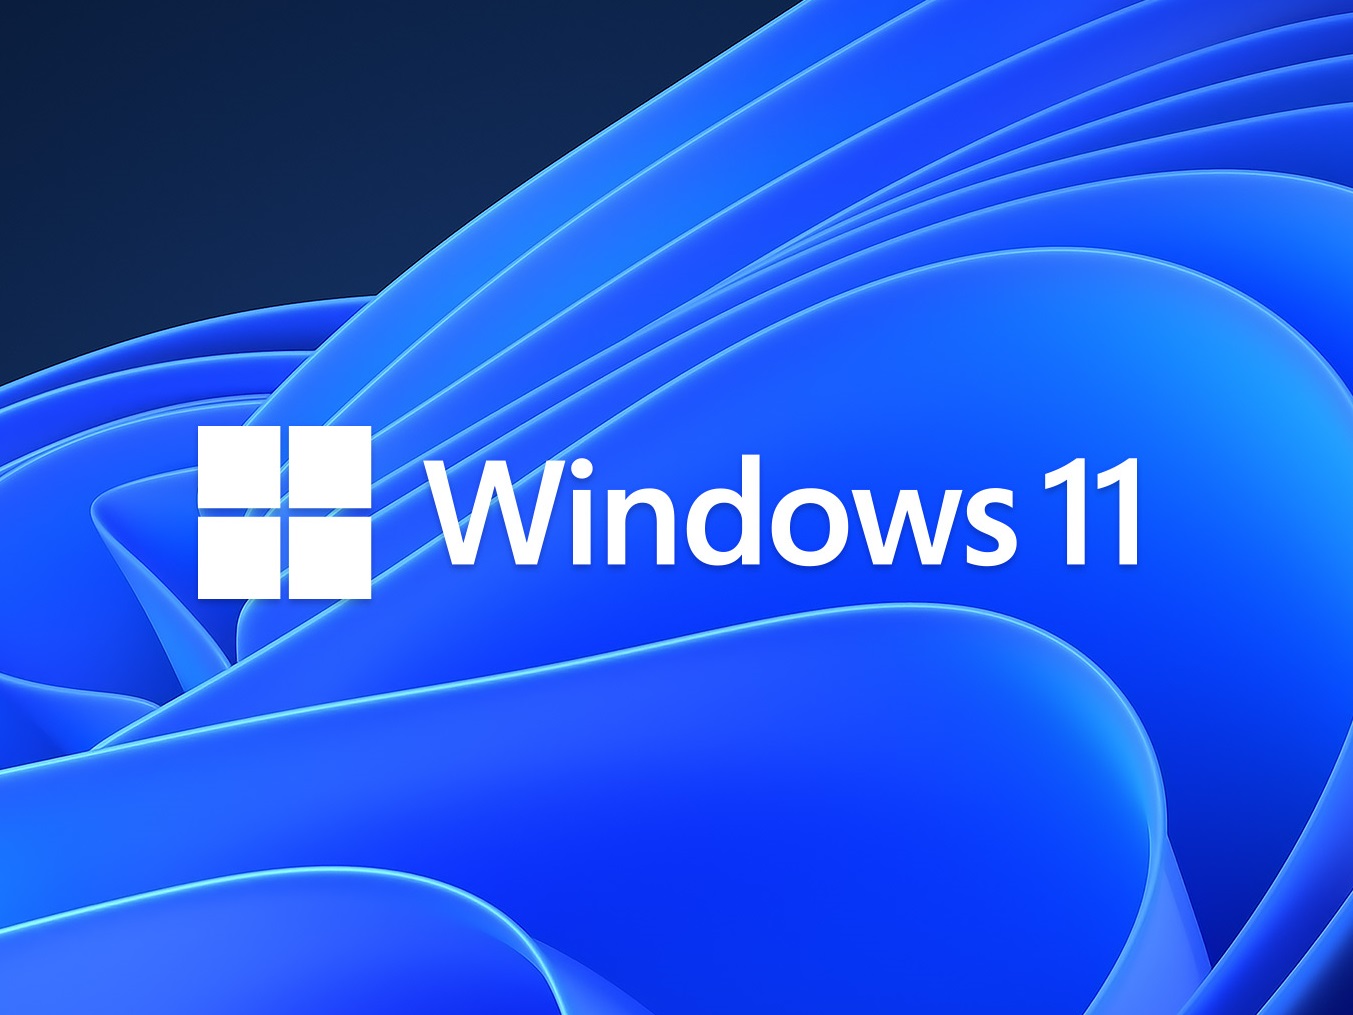 Windows 11 Fresh Install - This PC can't run Windows 11 - The Tech Journal